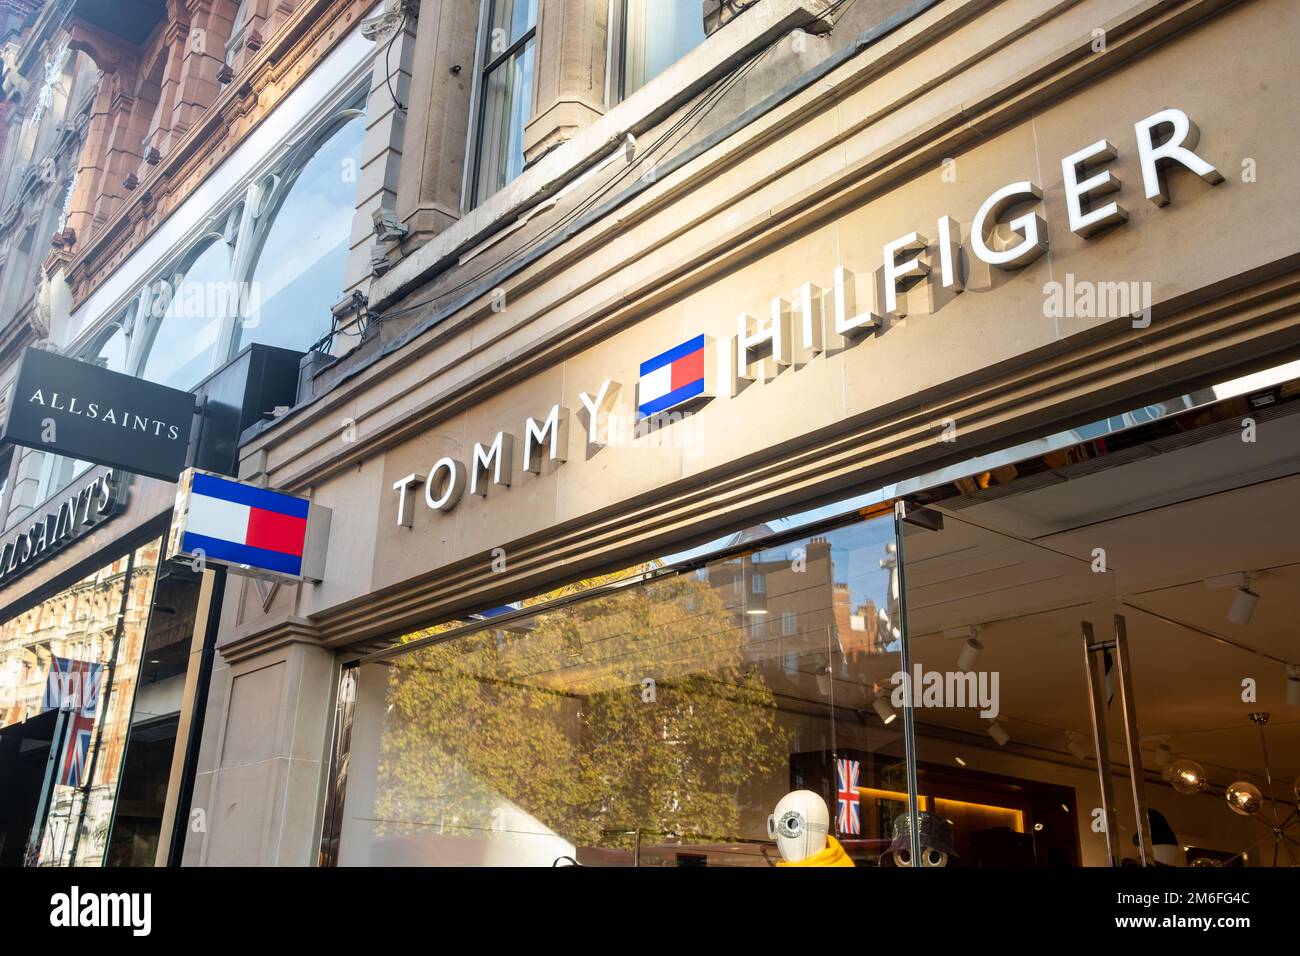 Fruitig spel periode London- Tommy Hilfiger store in Knightsbridge, an upmarket luxury American  fashion brand Stock Photo - Alamy